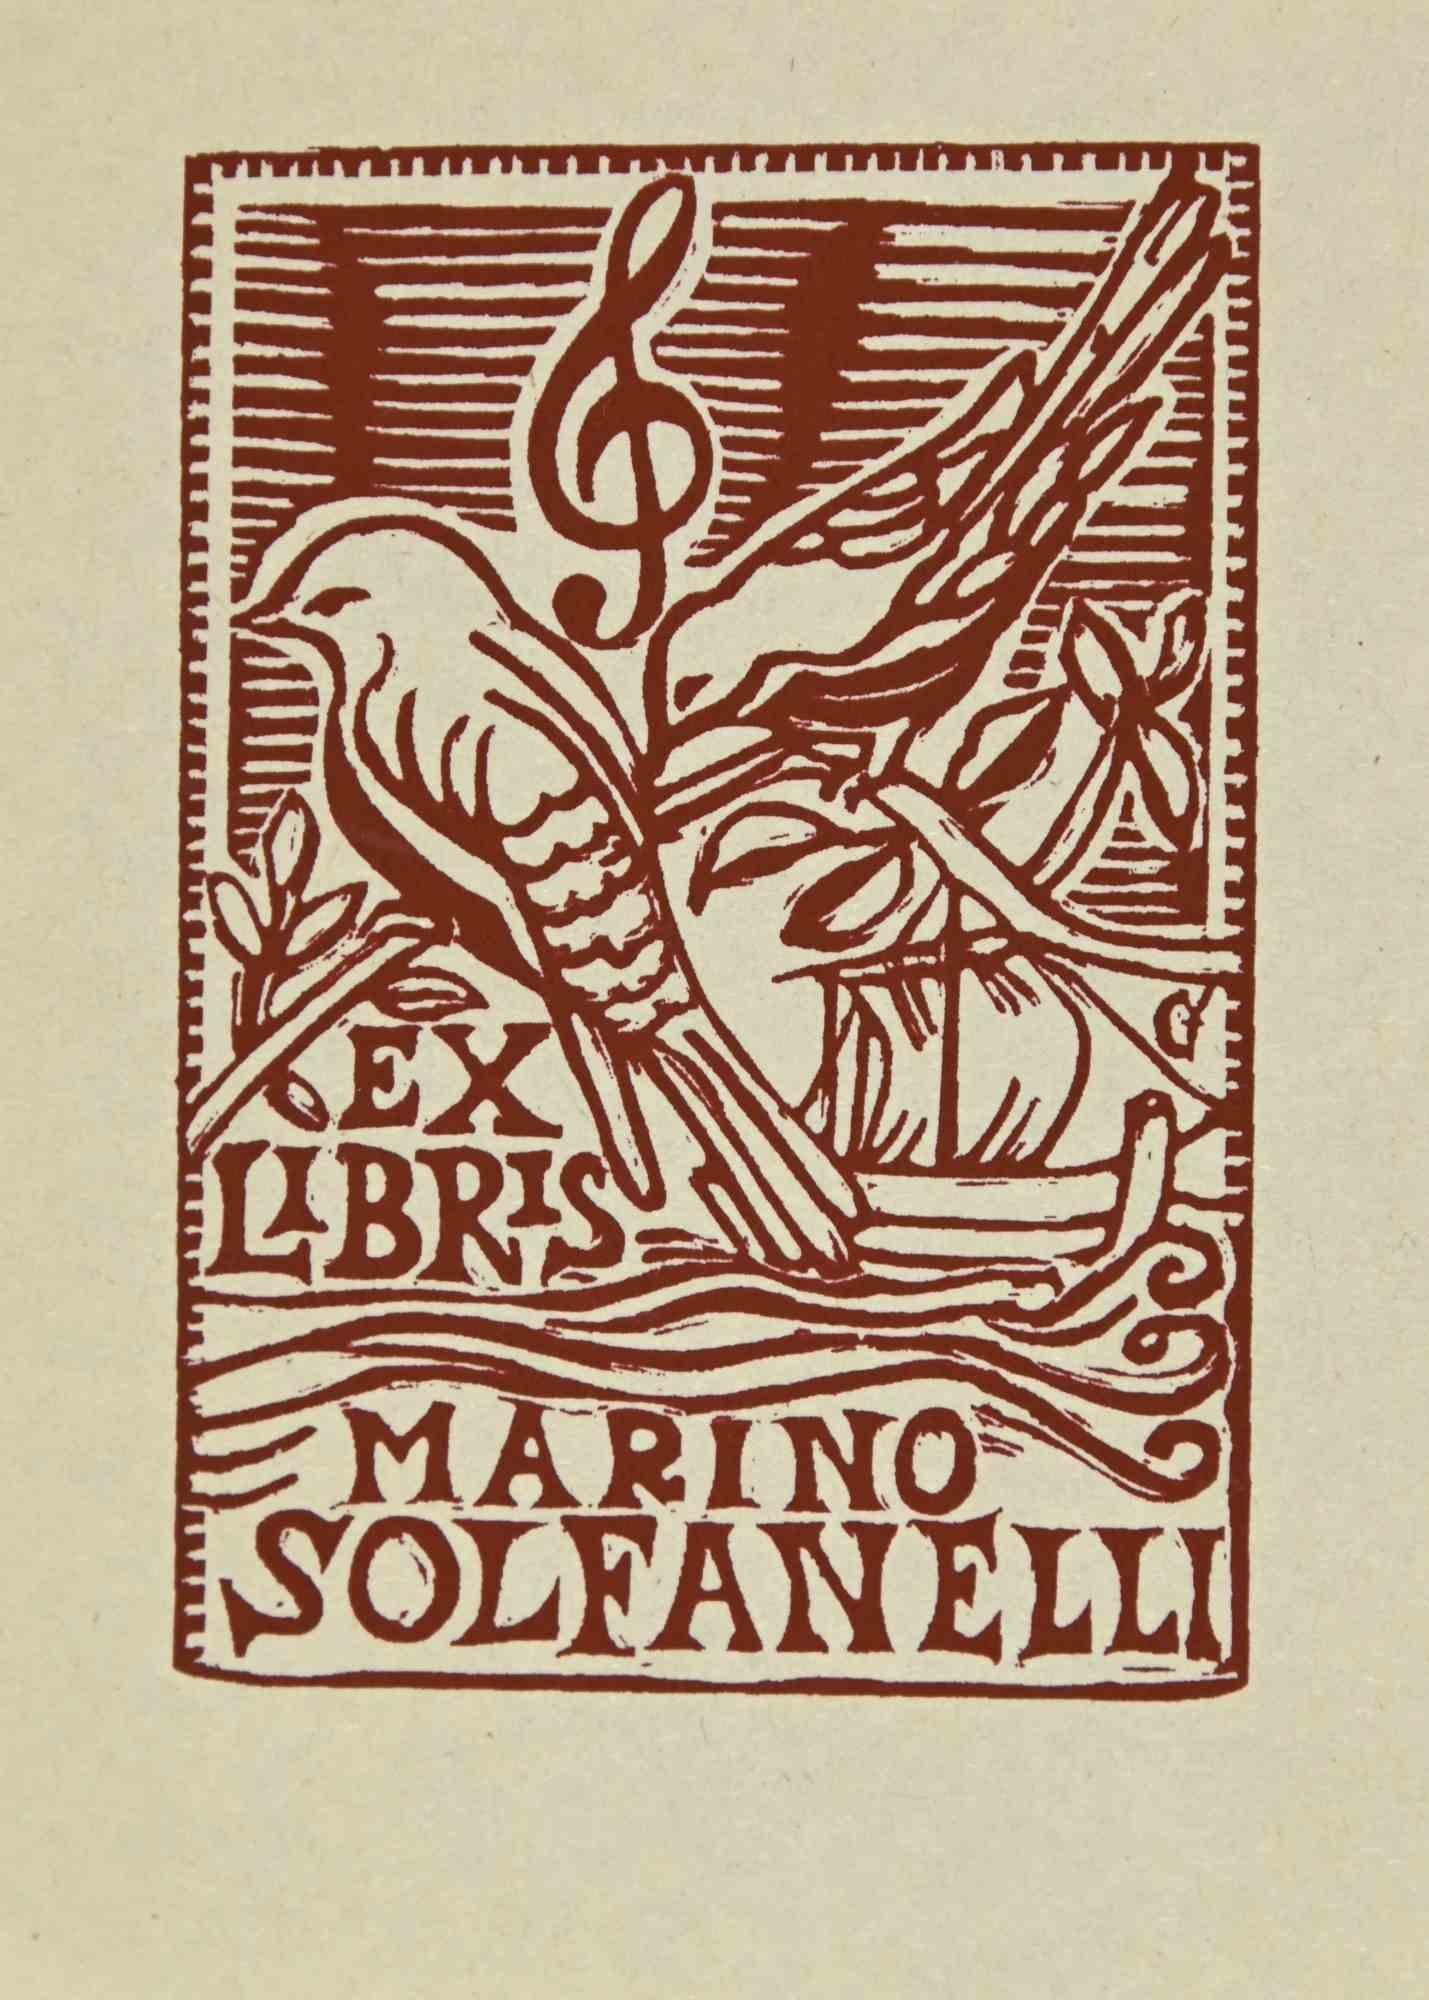 Ex libris - Marino Solfanelli - Woodcut - Mid 20th Century - Art by Unknown